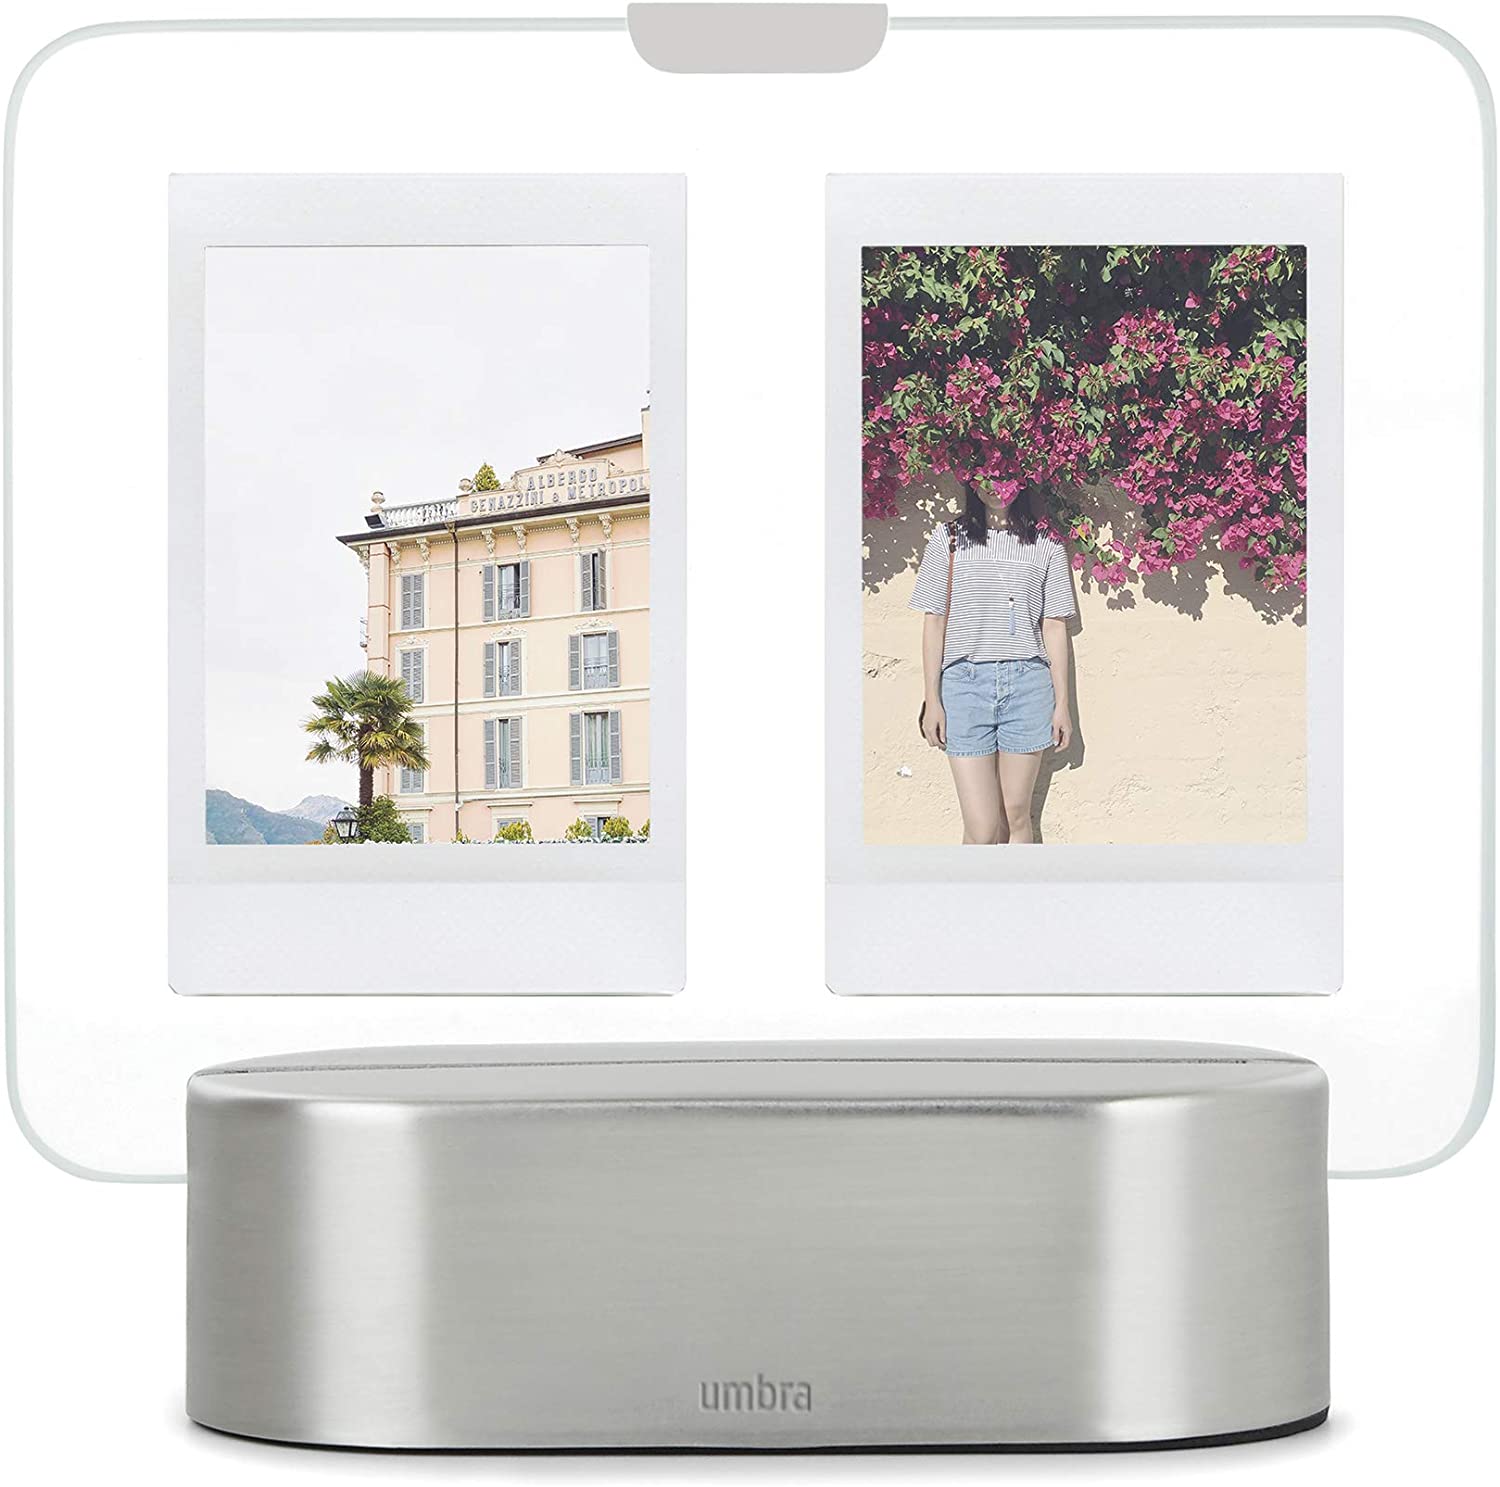 Umbra LED Illuminated Photo Frame for Two 5 x 7.5 cm Polaroid Pictures